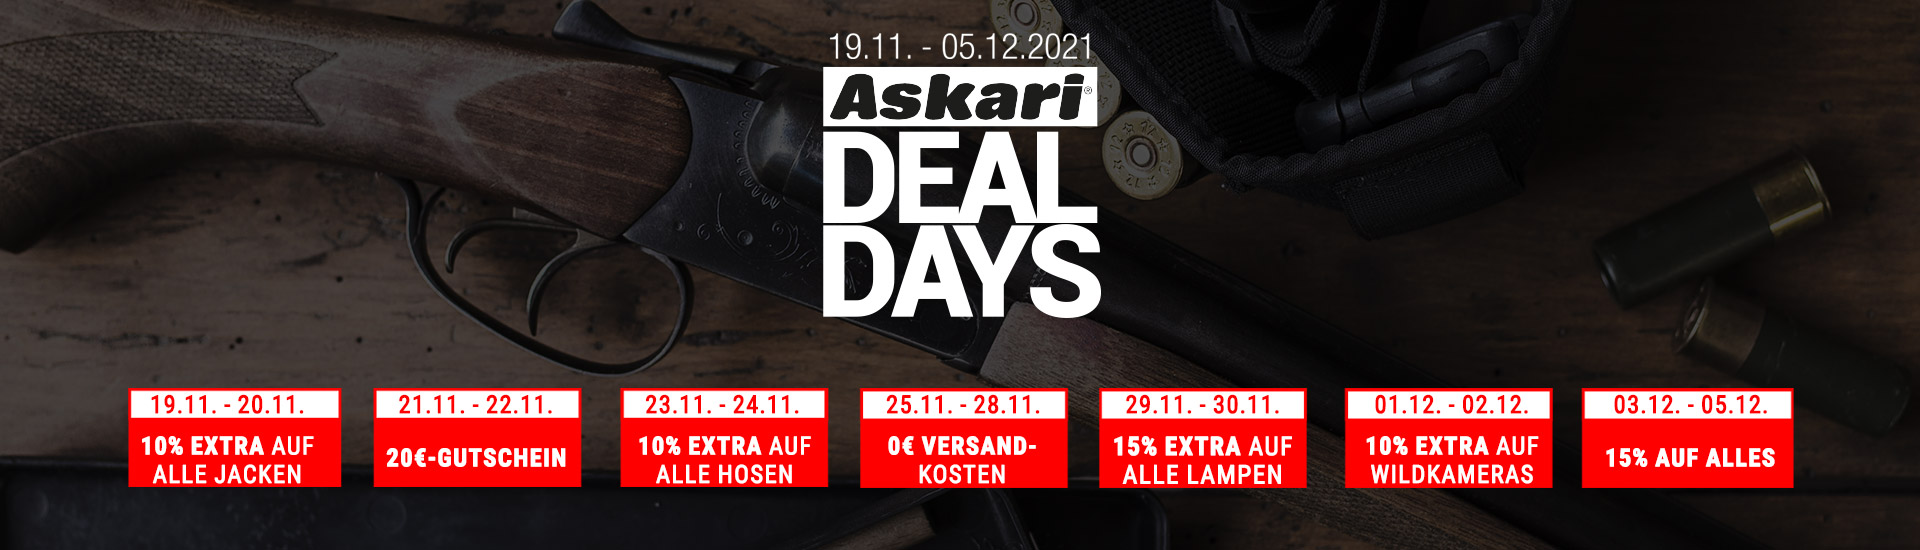 Askari Deal Days Bedingungen